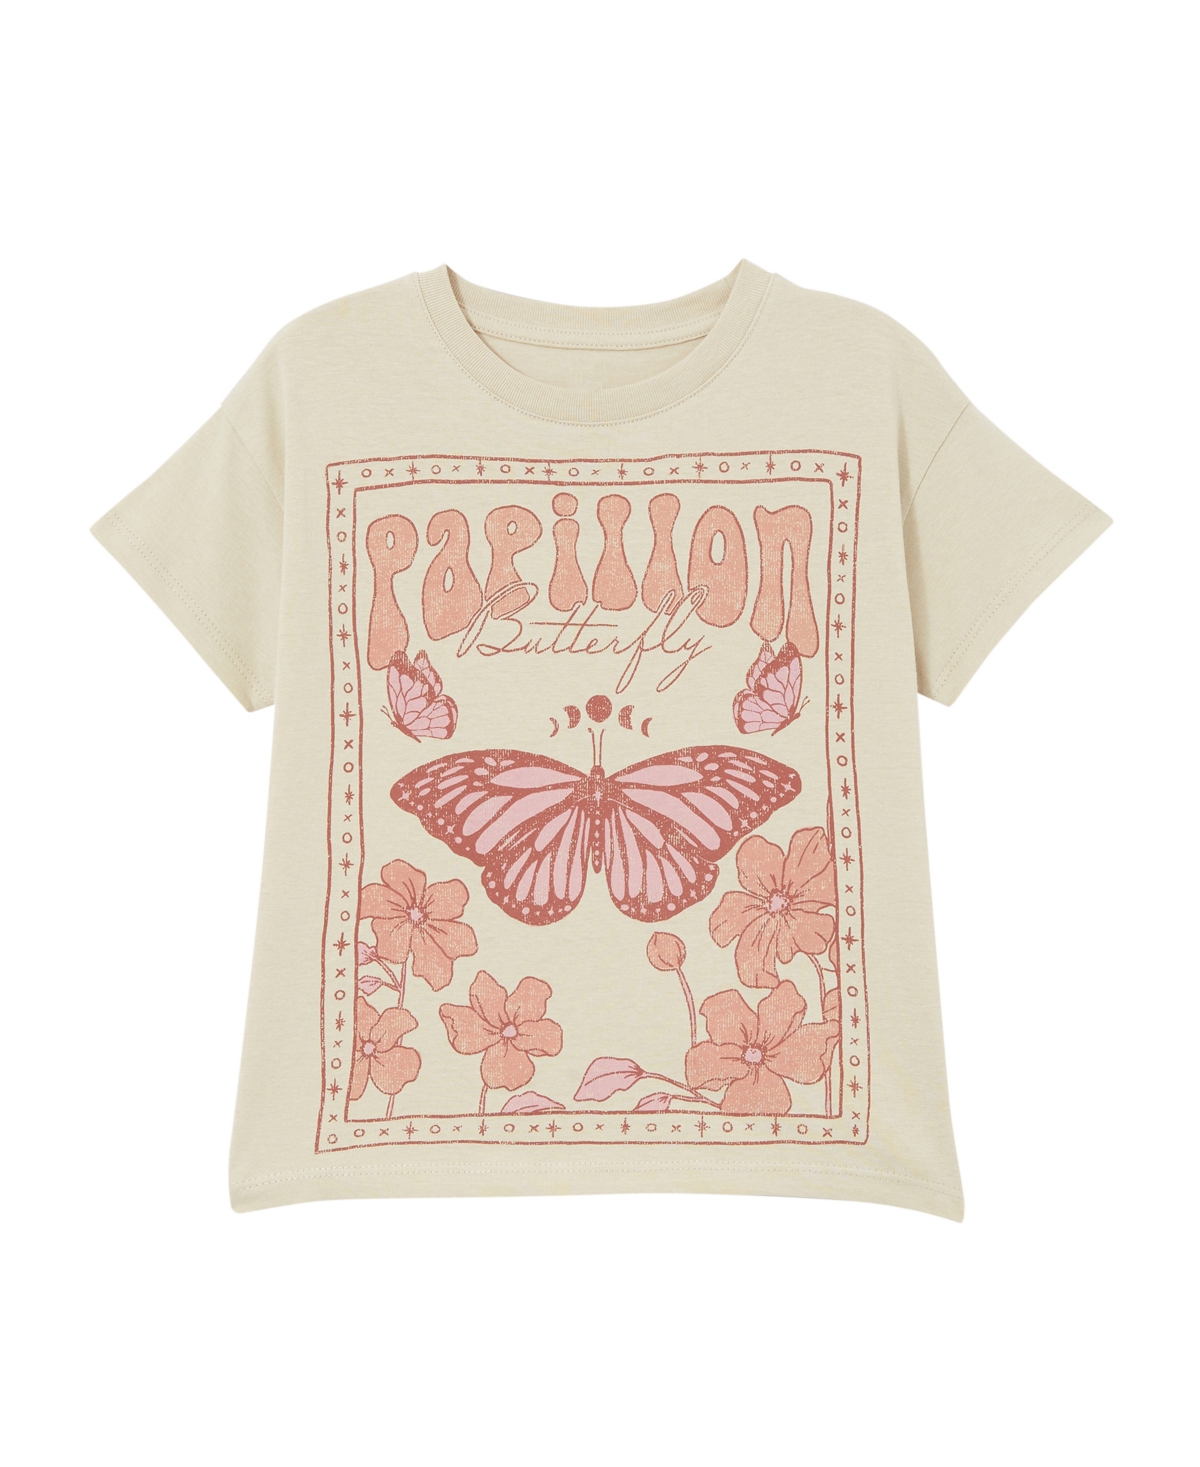 Cotton On Kids' Big Girls Poppy Short Sleeve Print T-shirt In Rainy Day,papillion Butterfly